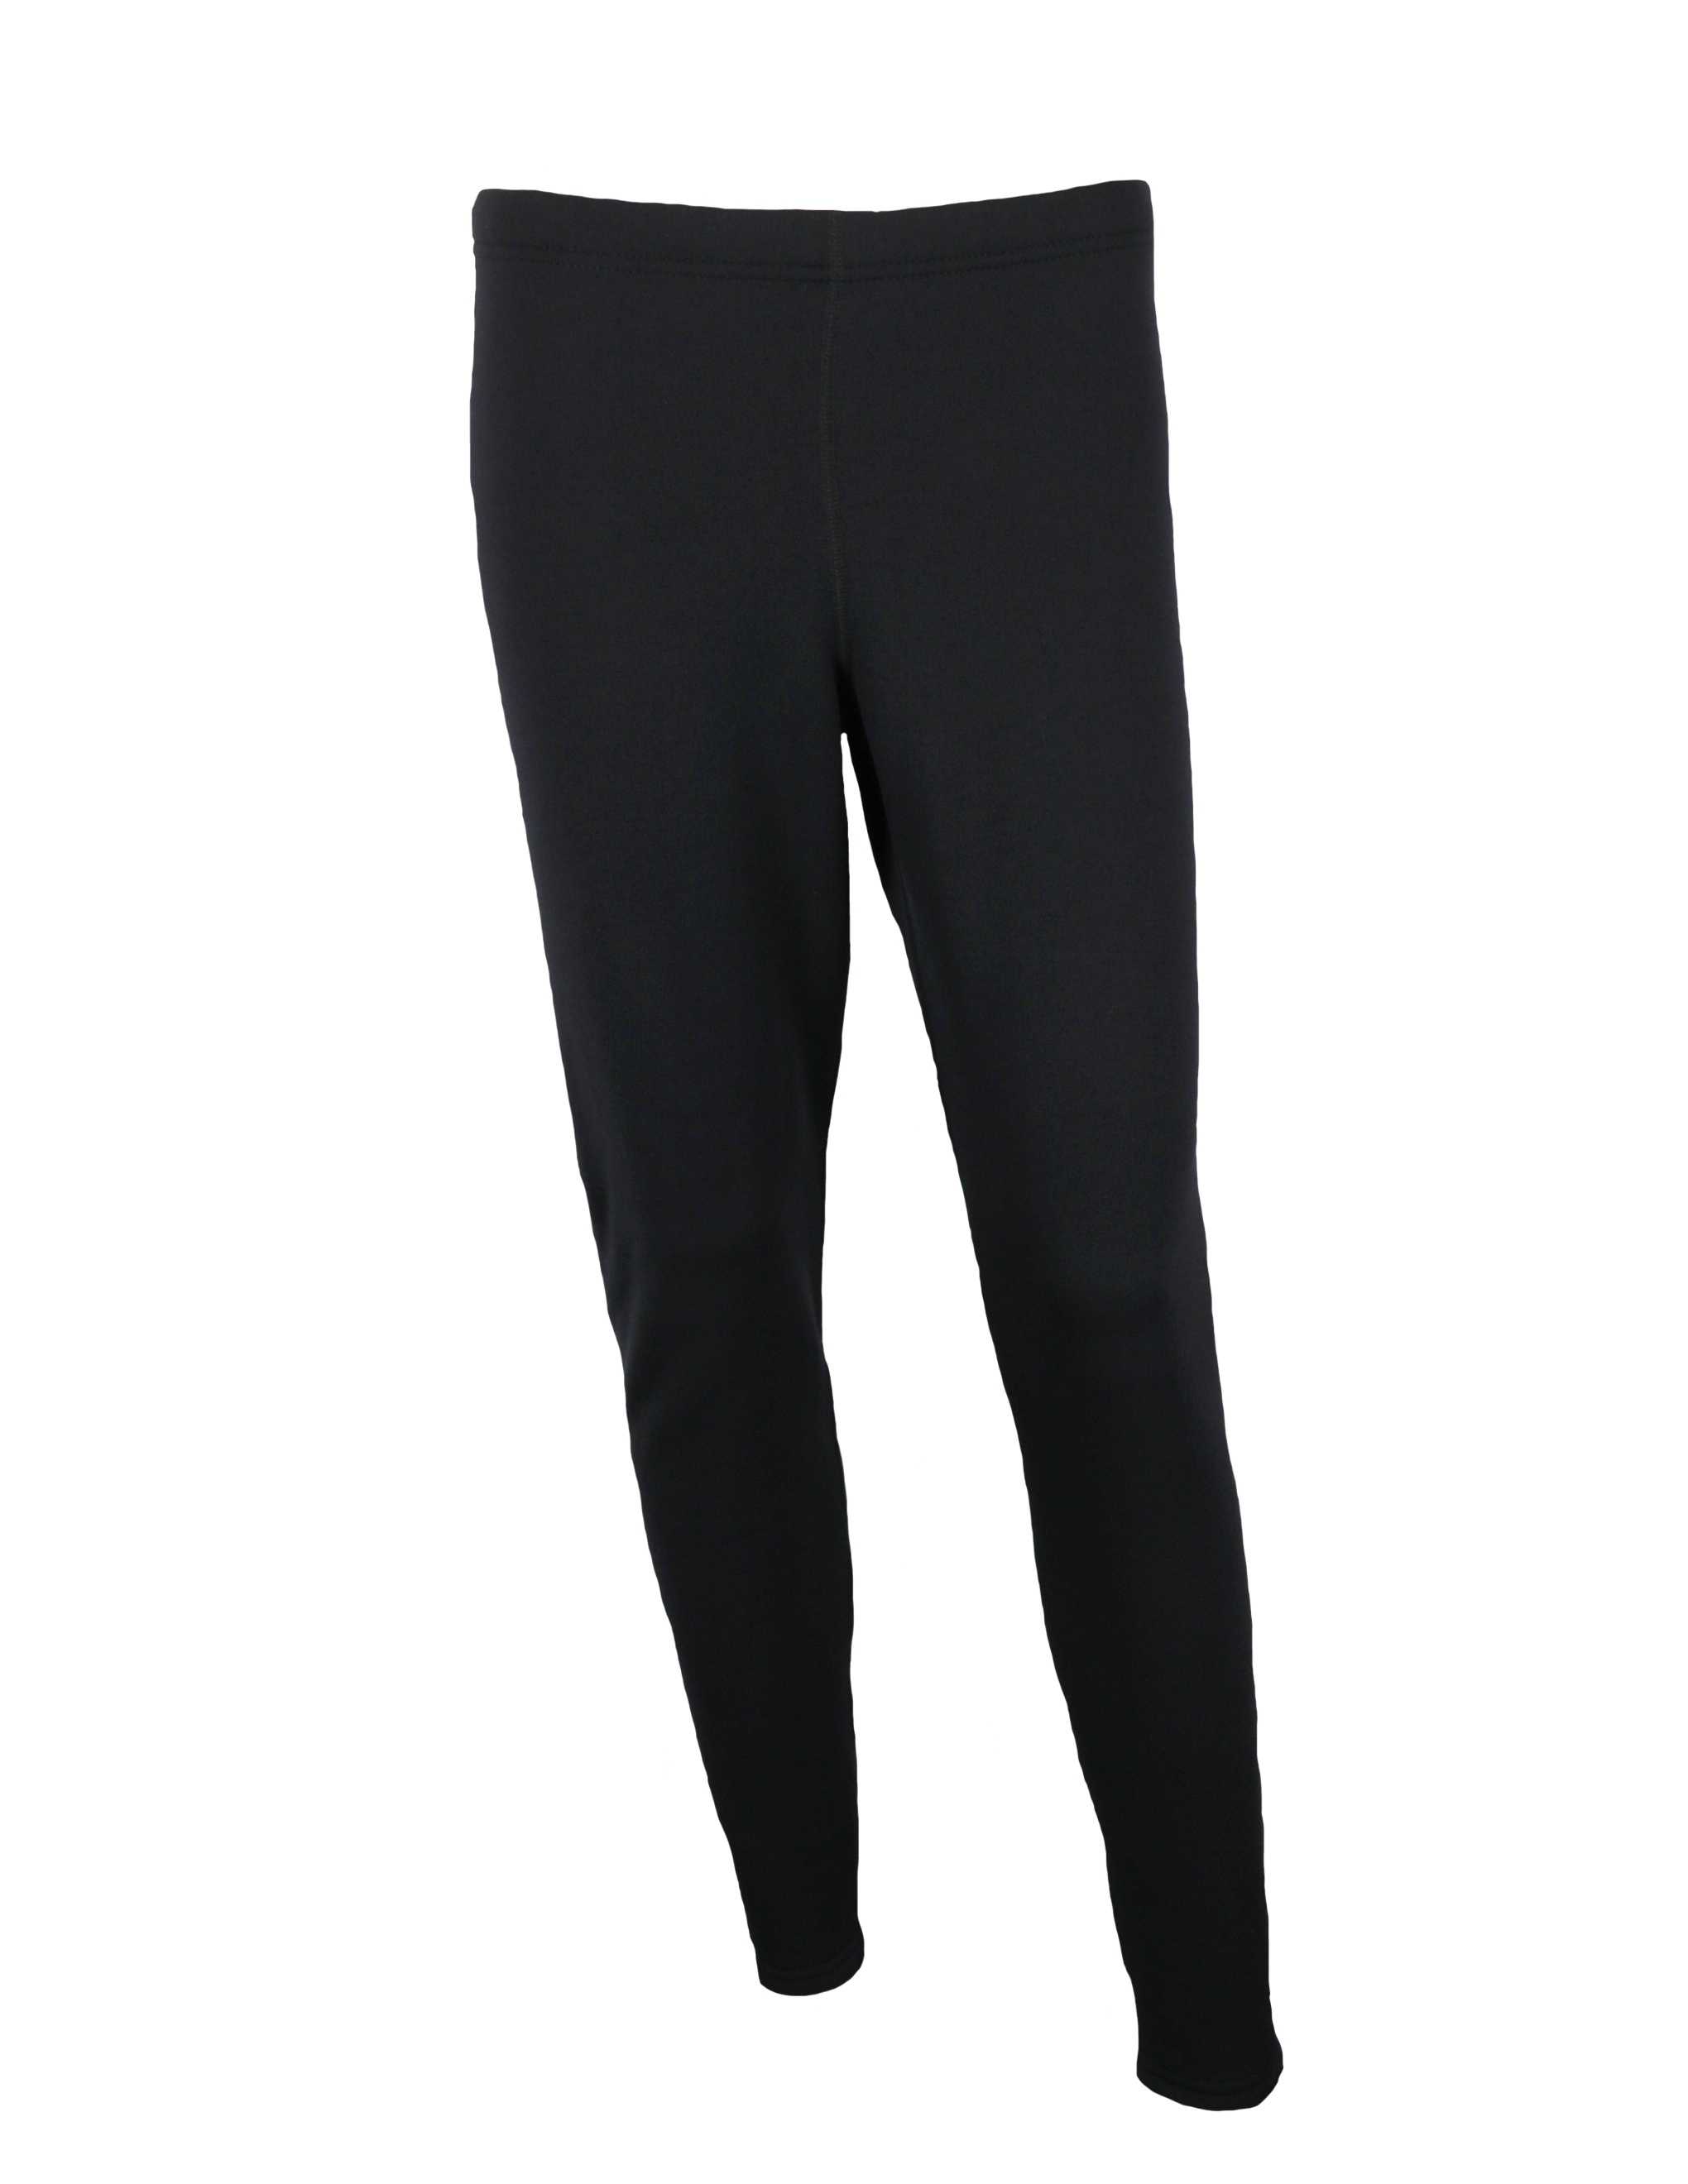  Russell Athletic Men's Dri-Power Core Pant, Black